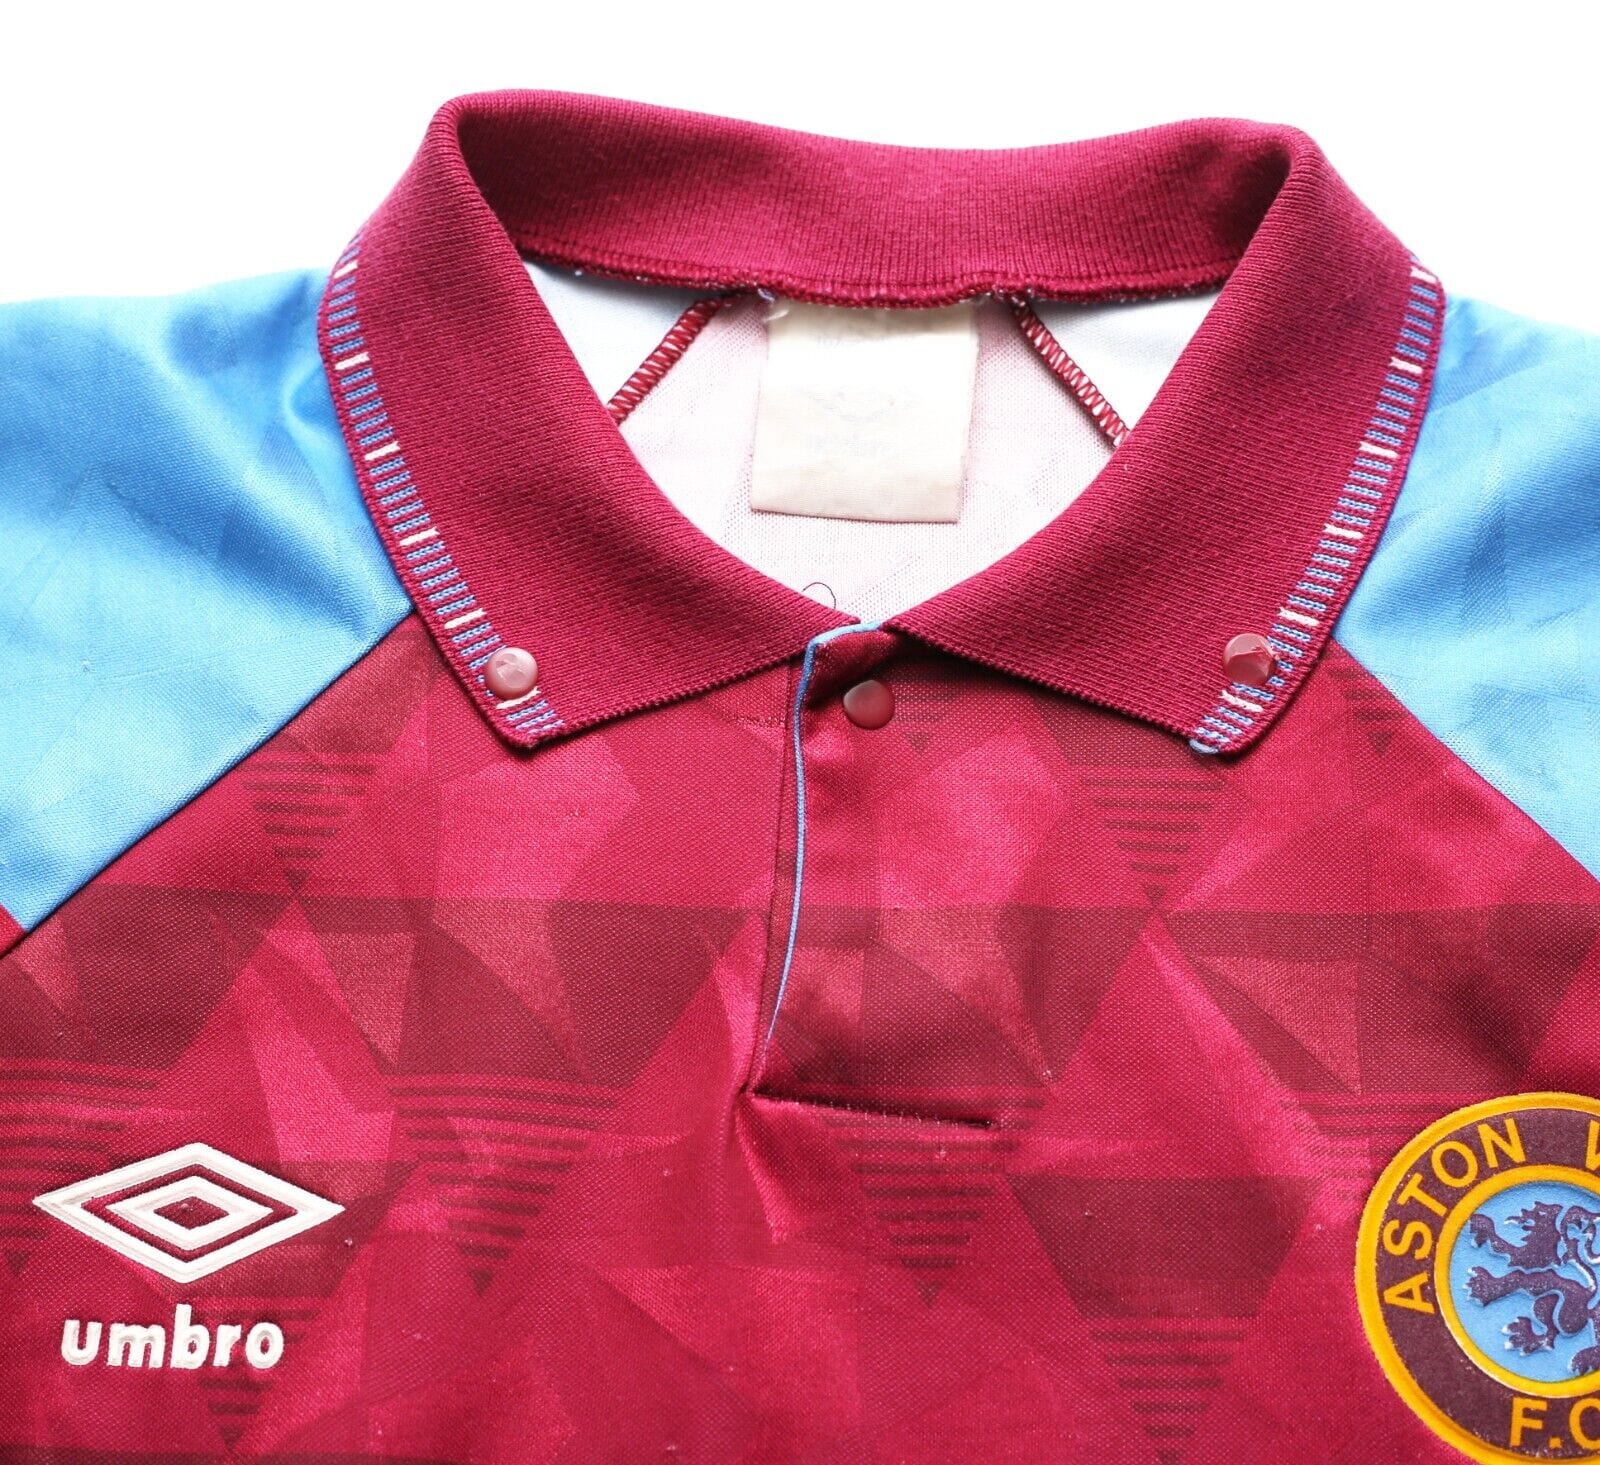 1990/92 ASTON VILLA Vintage Umbro Home Football Shirt (L) Platt, McGrath Era